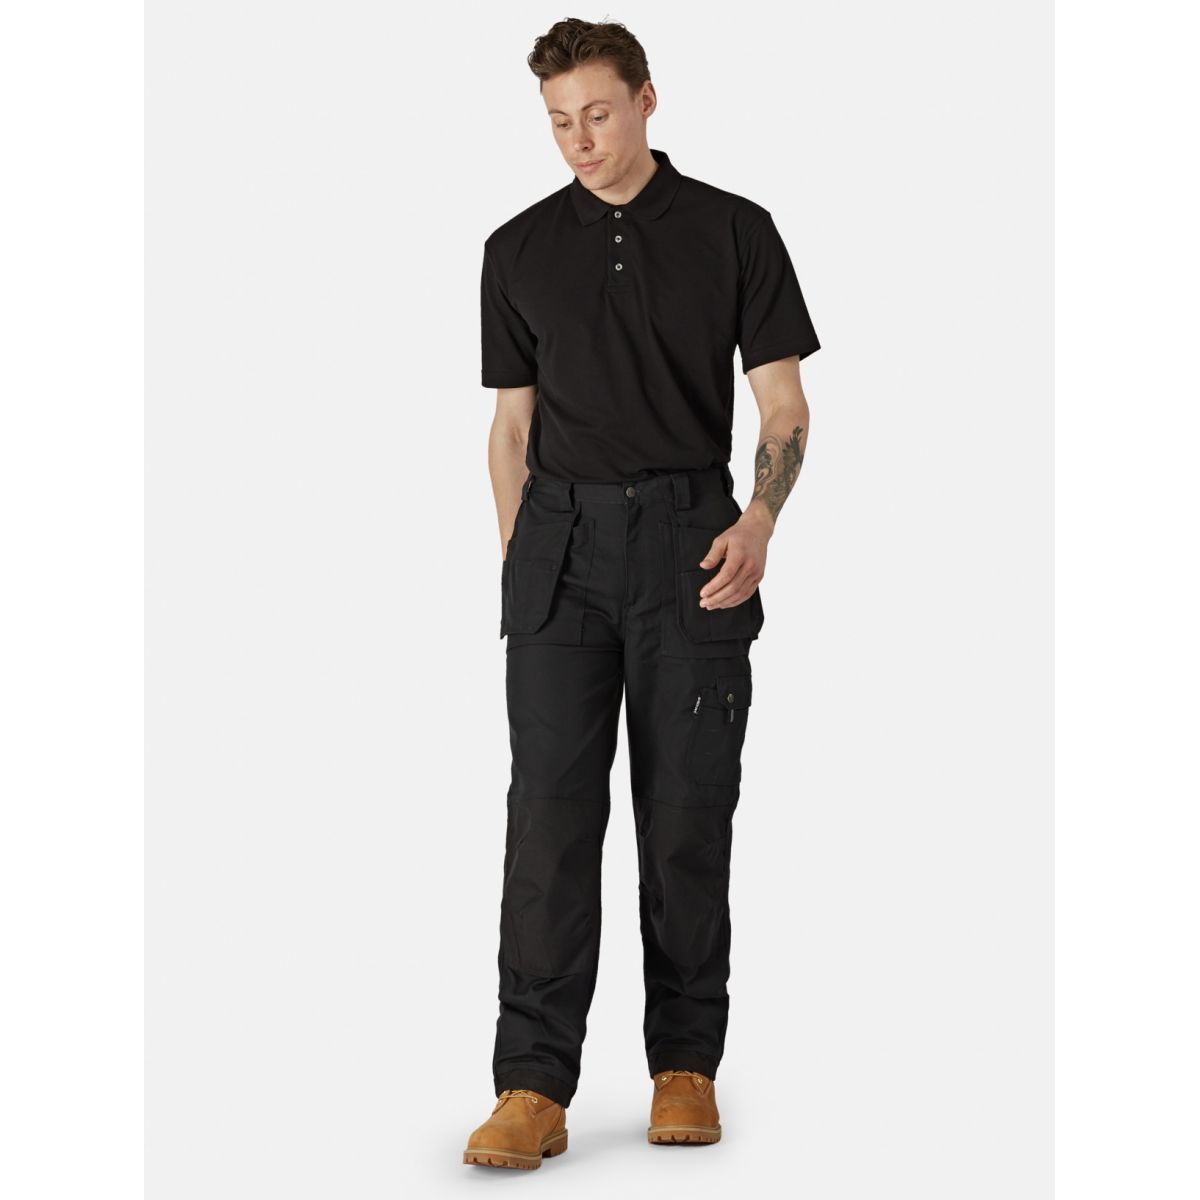 Pantalon Eisenhower multi-poches Noir - Dickies - Taille 42 2